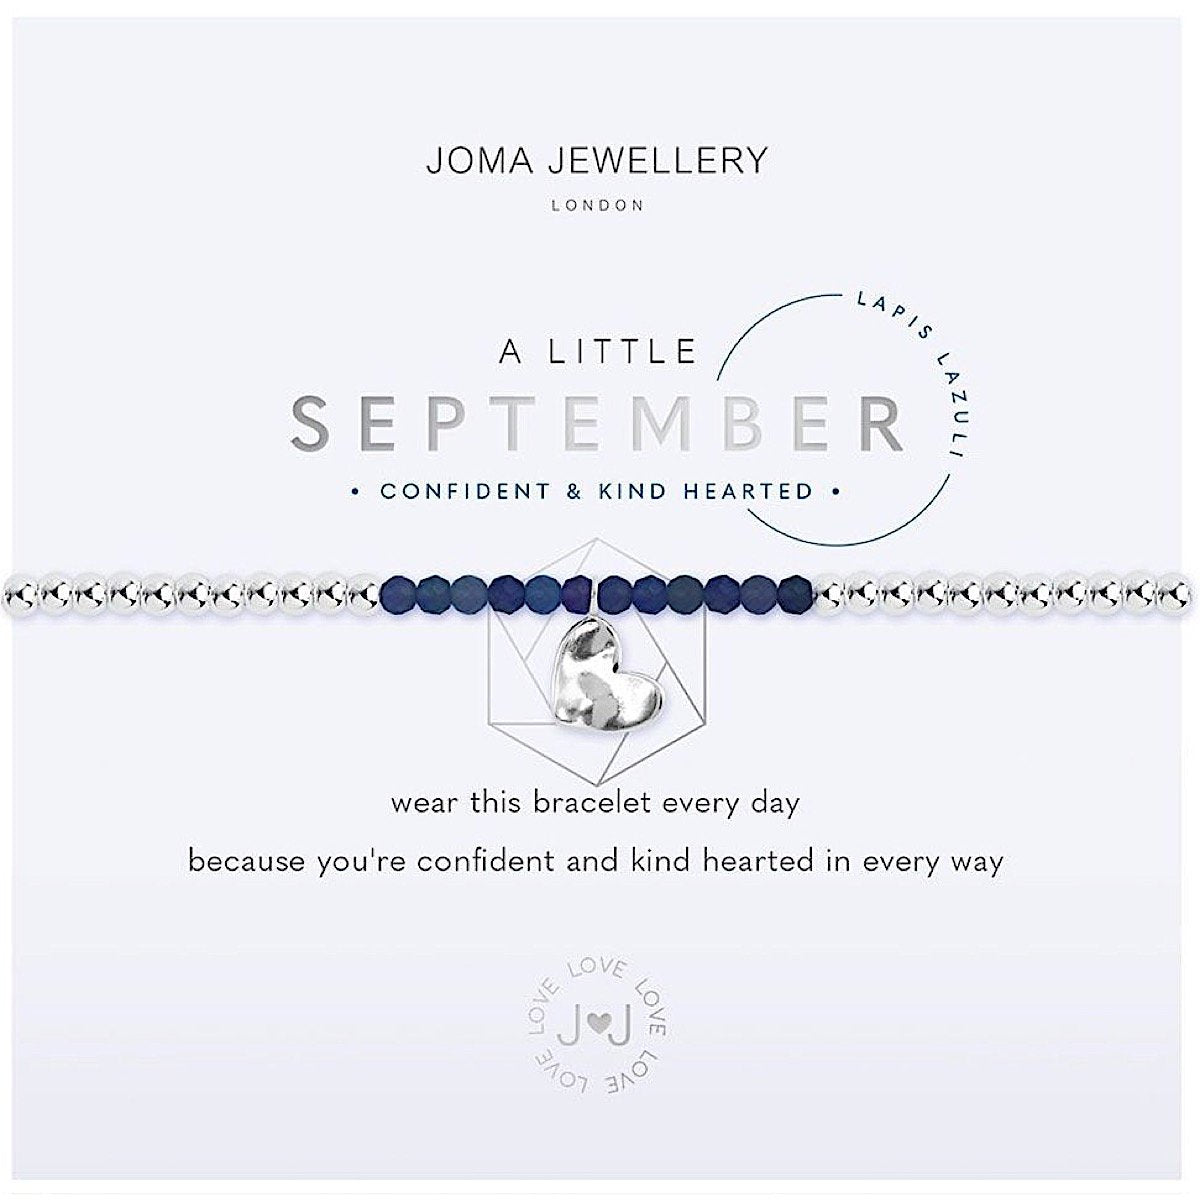 Joma Jewellery - September Birthstone - Lapis - Confident & Kind Hearted